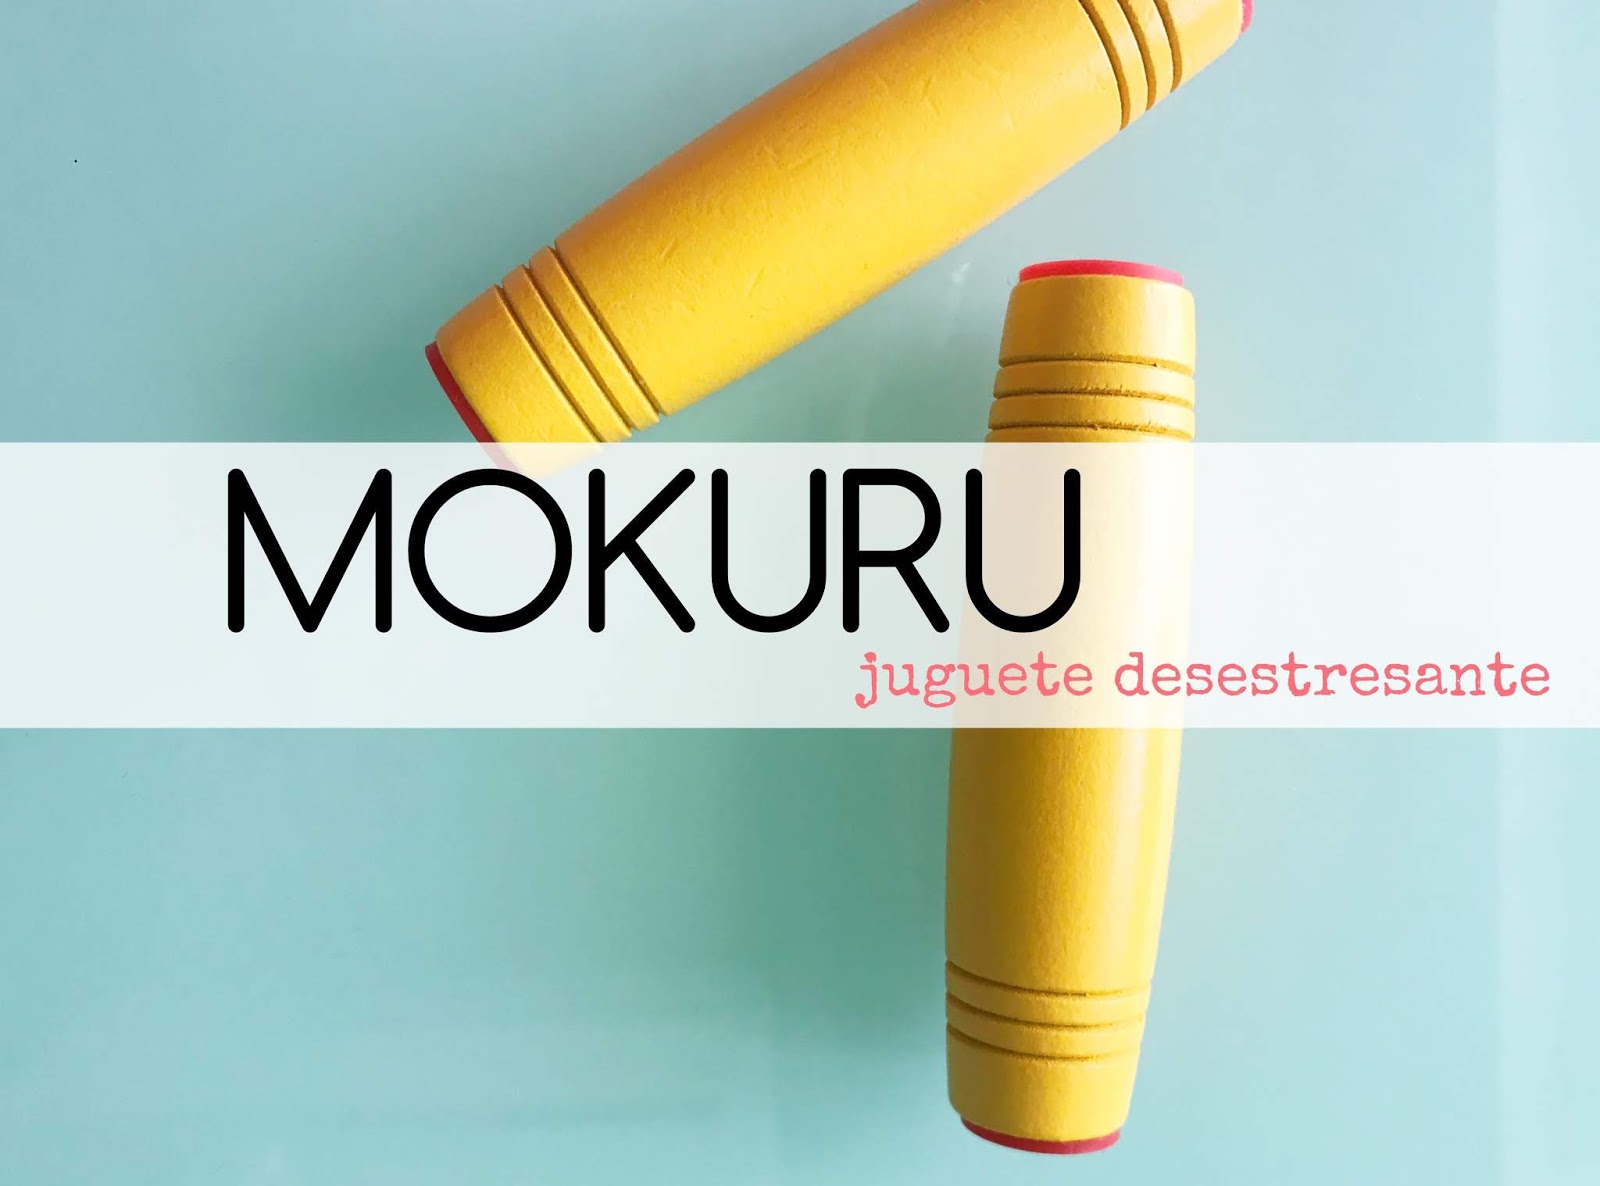 Mokuru, juguete desestresante